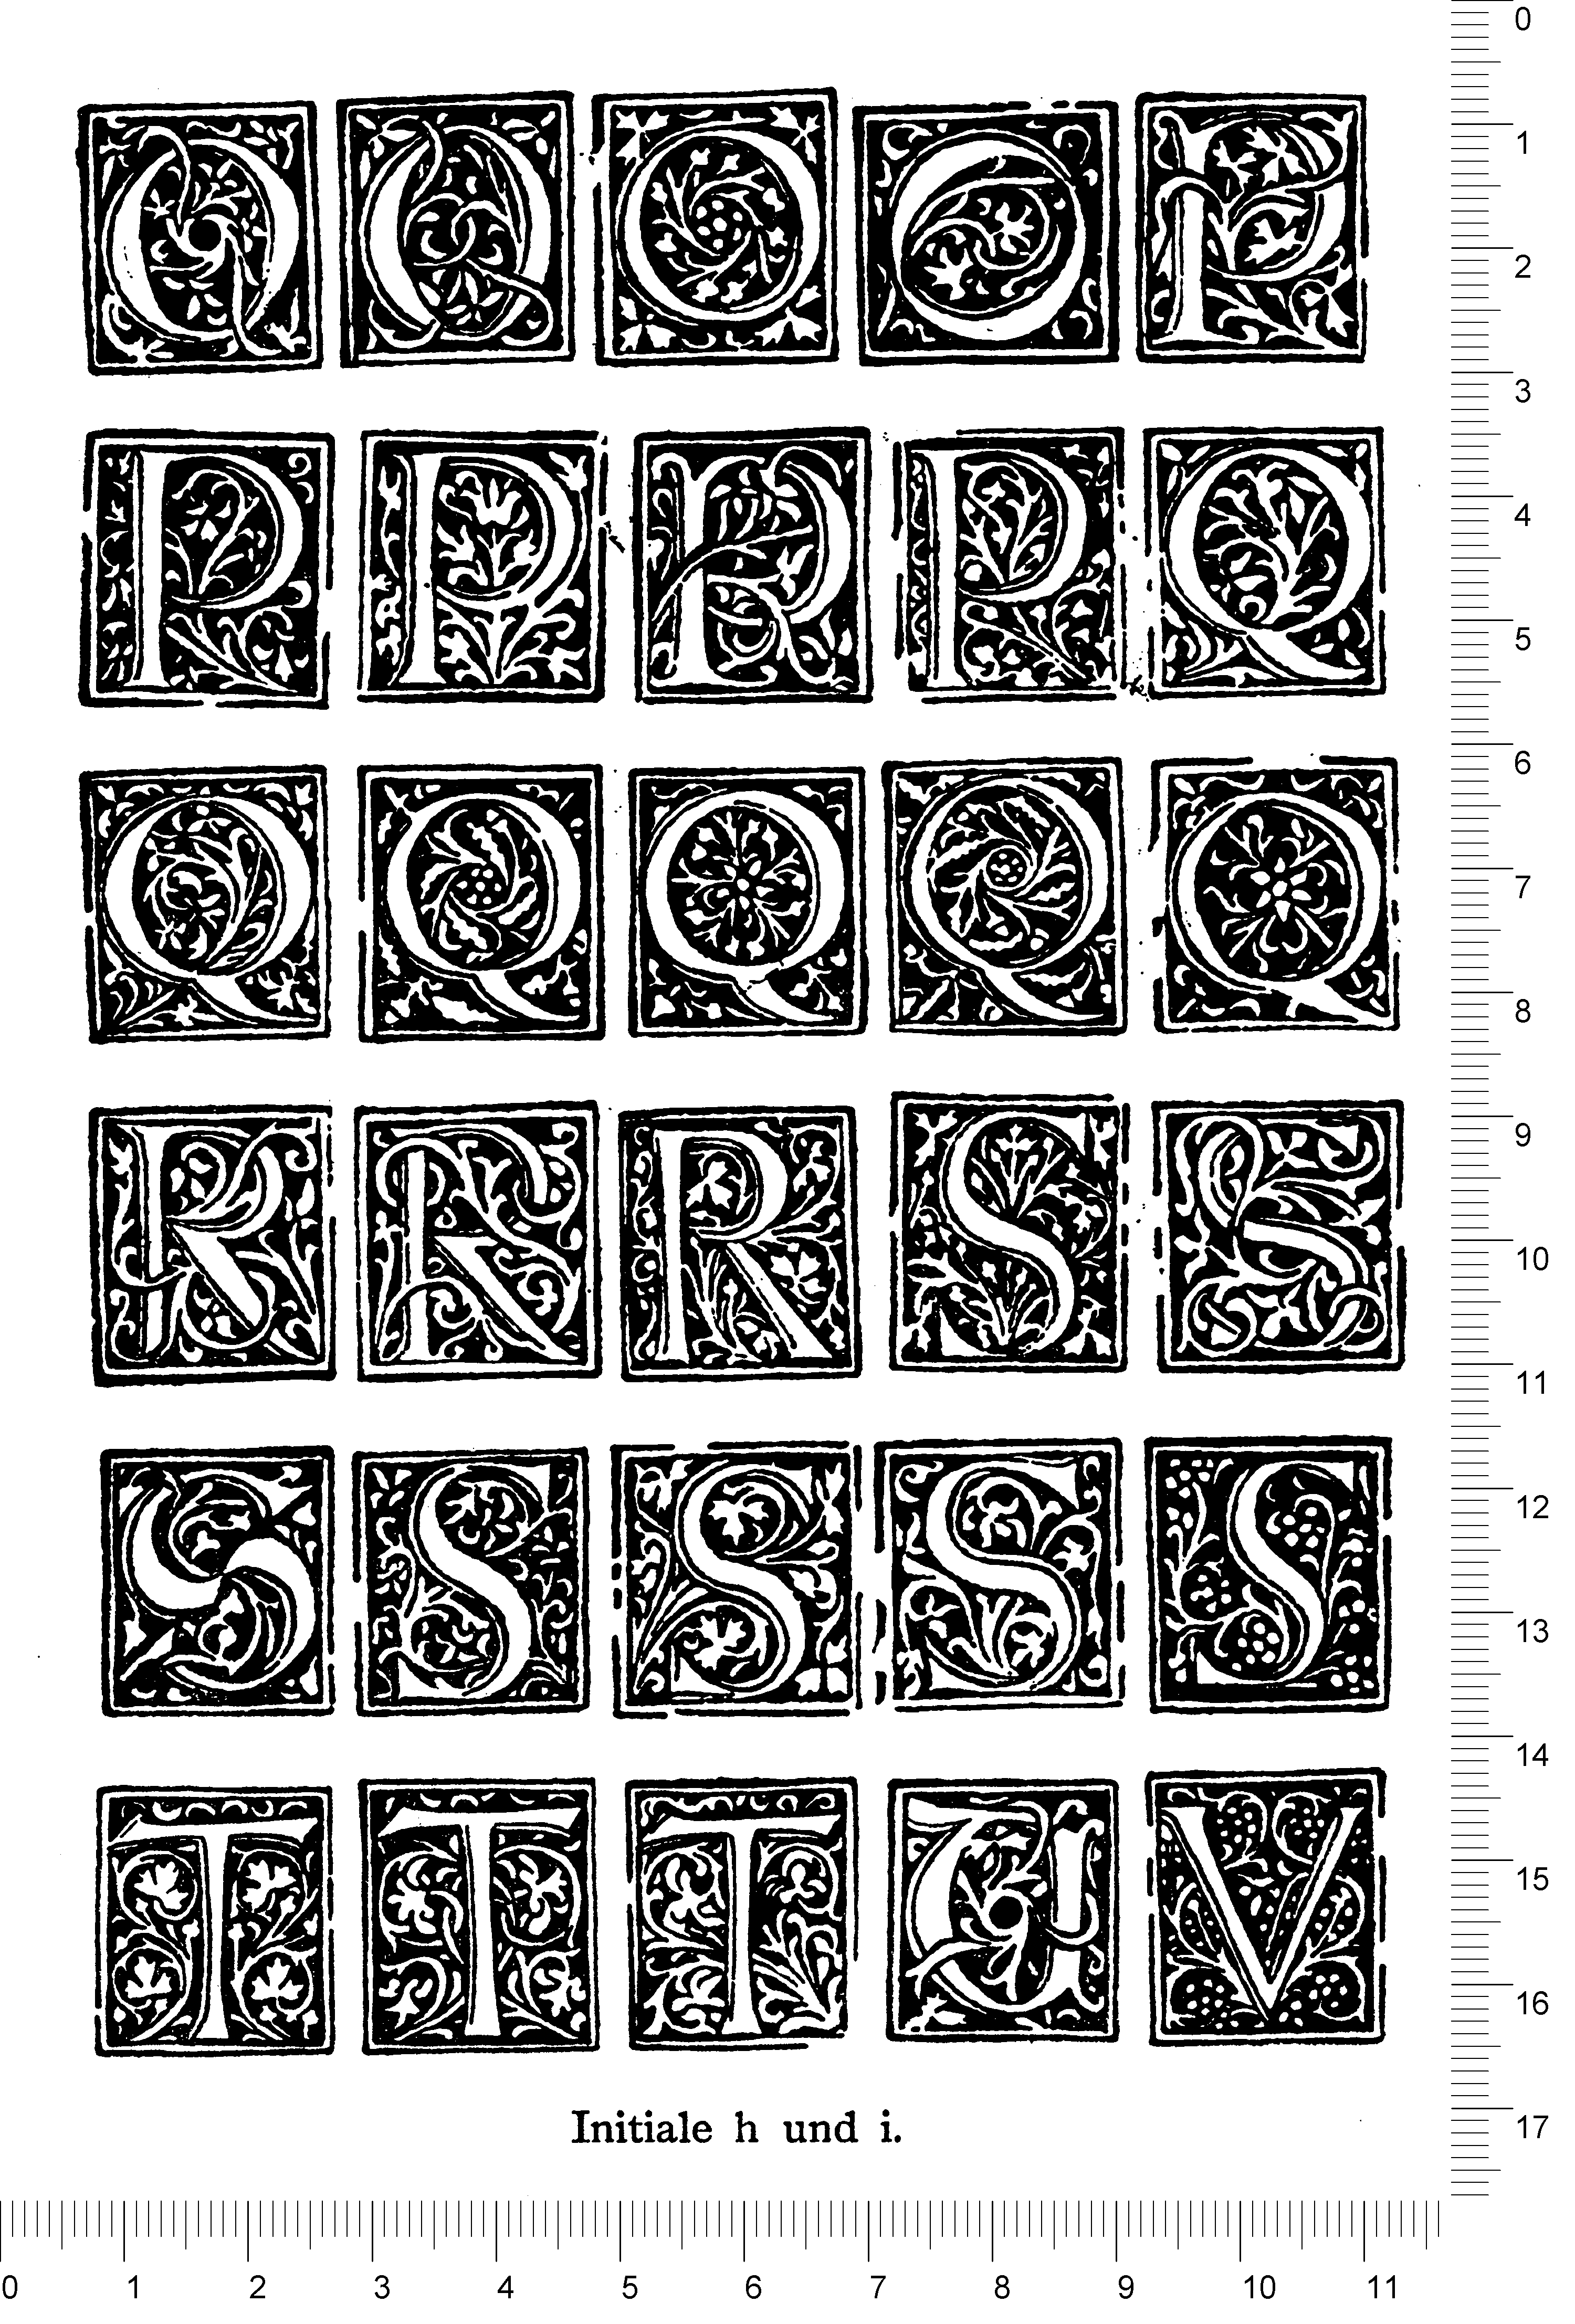 Abbildung der GfT-Tafeln vonGfT1064.1